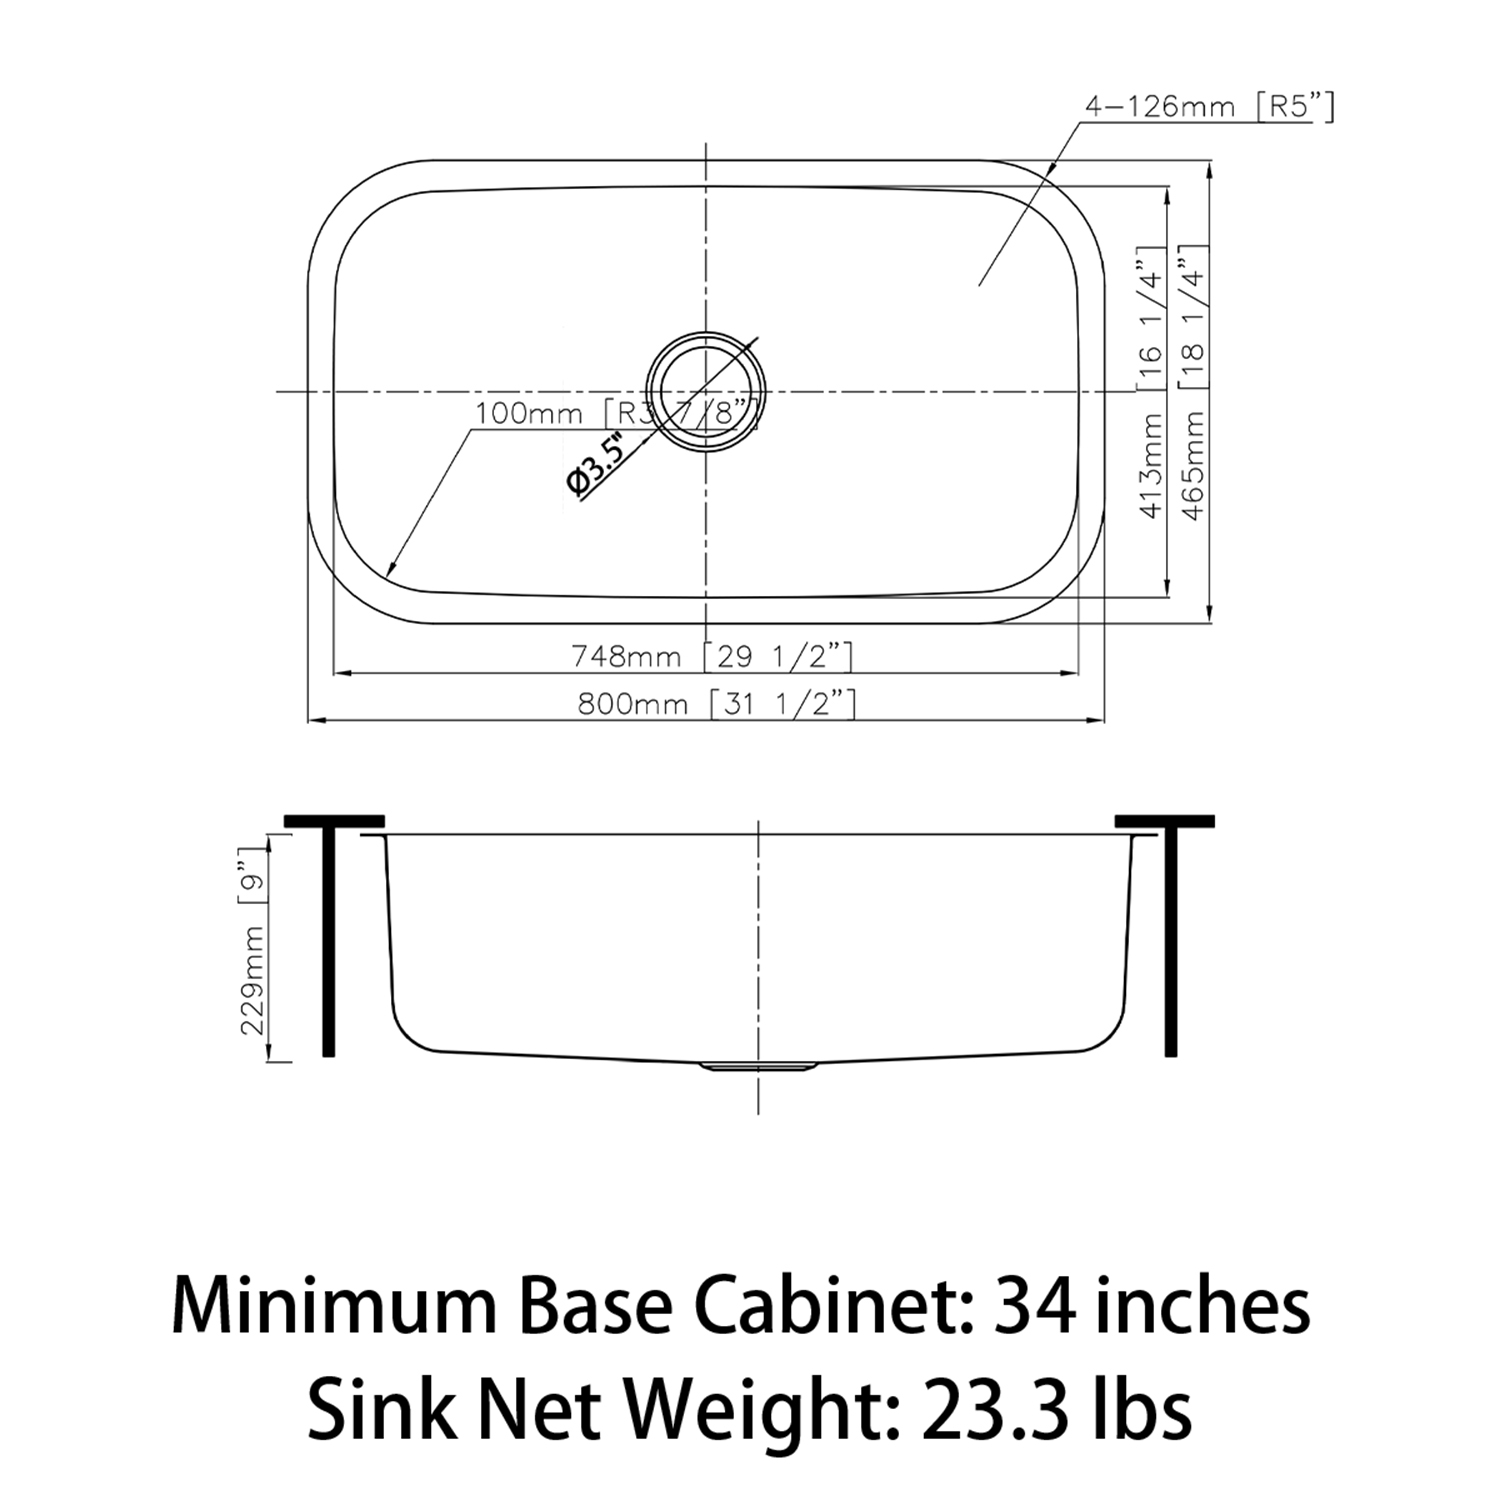 MU3118S Undermount Single Bowl 304 Stainless Steel Kitchen Sink